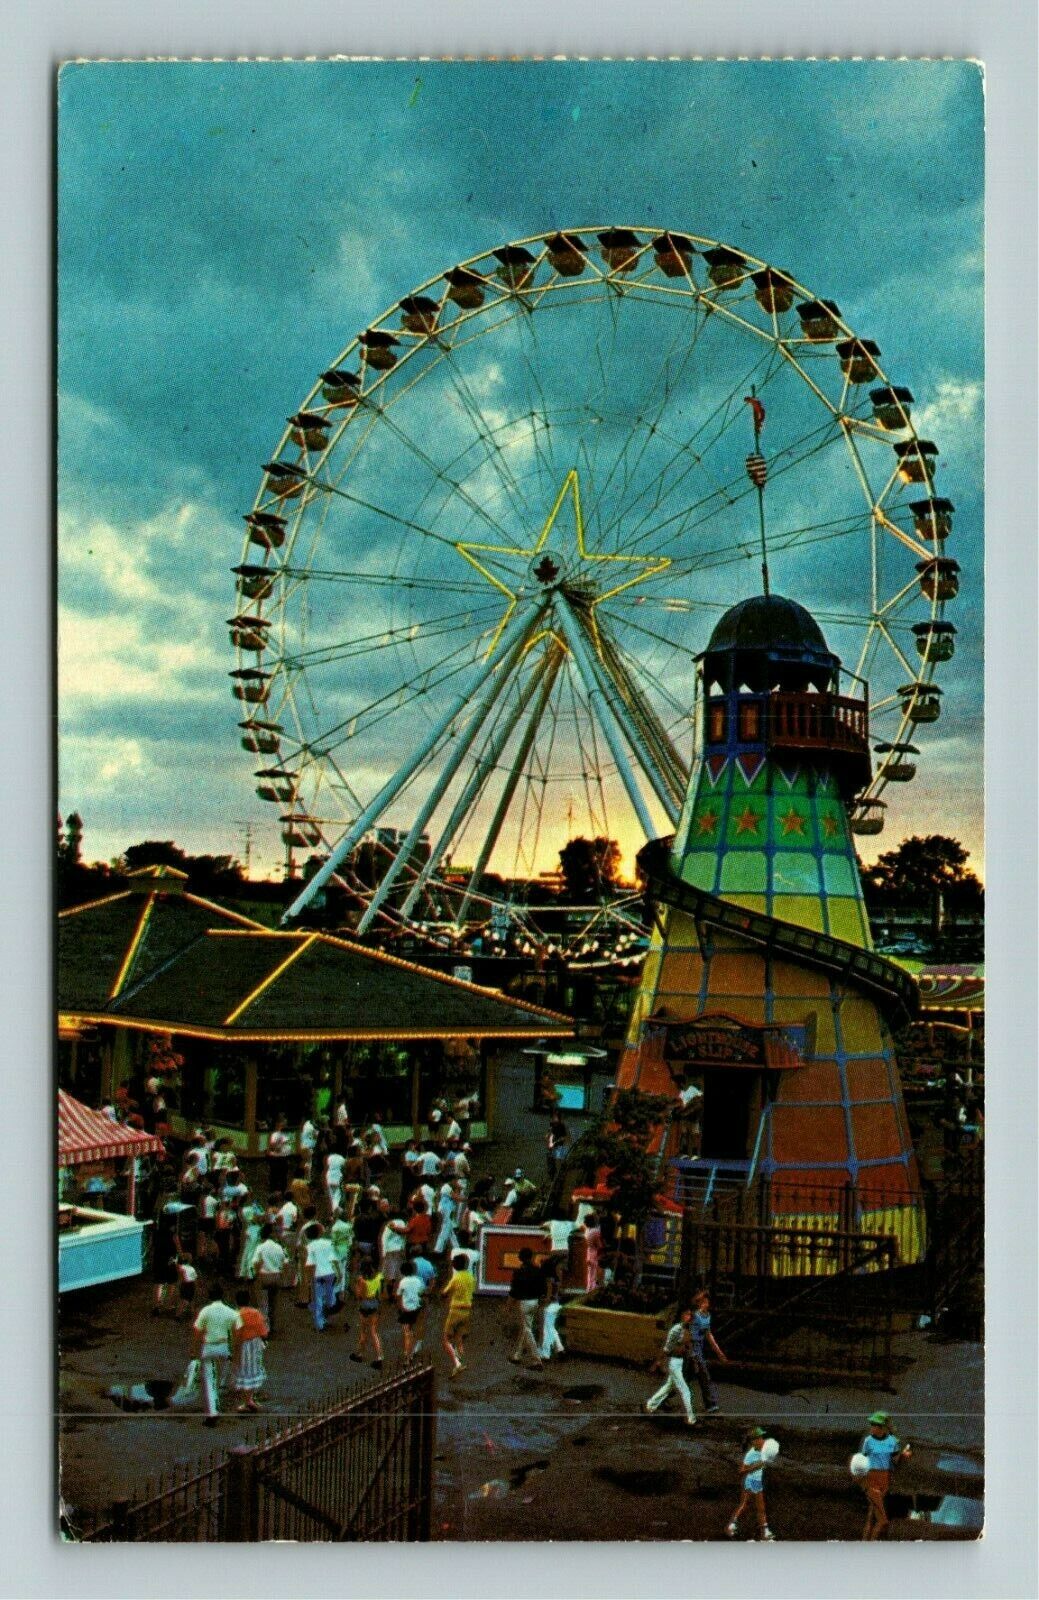 Niagara Falls-Canada, Maple Leaf Village, Rides Midway, c1980 Vintage Postcard